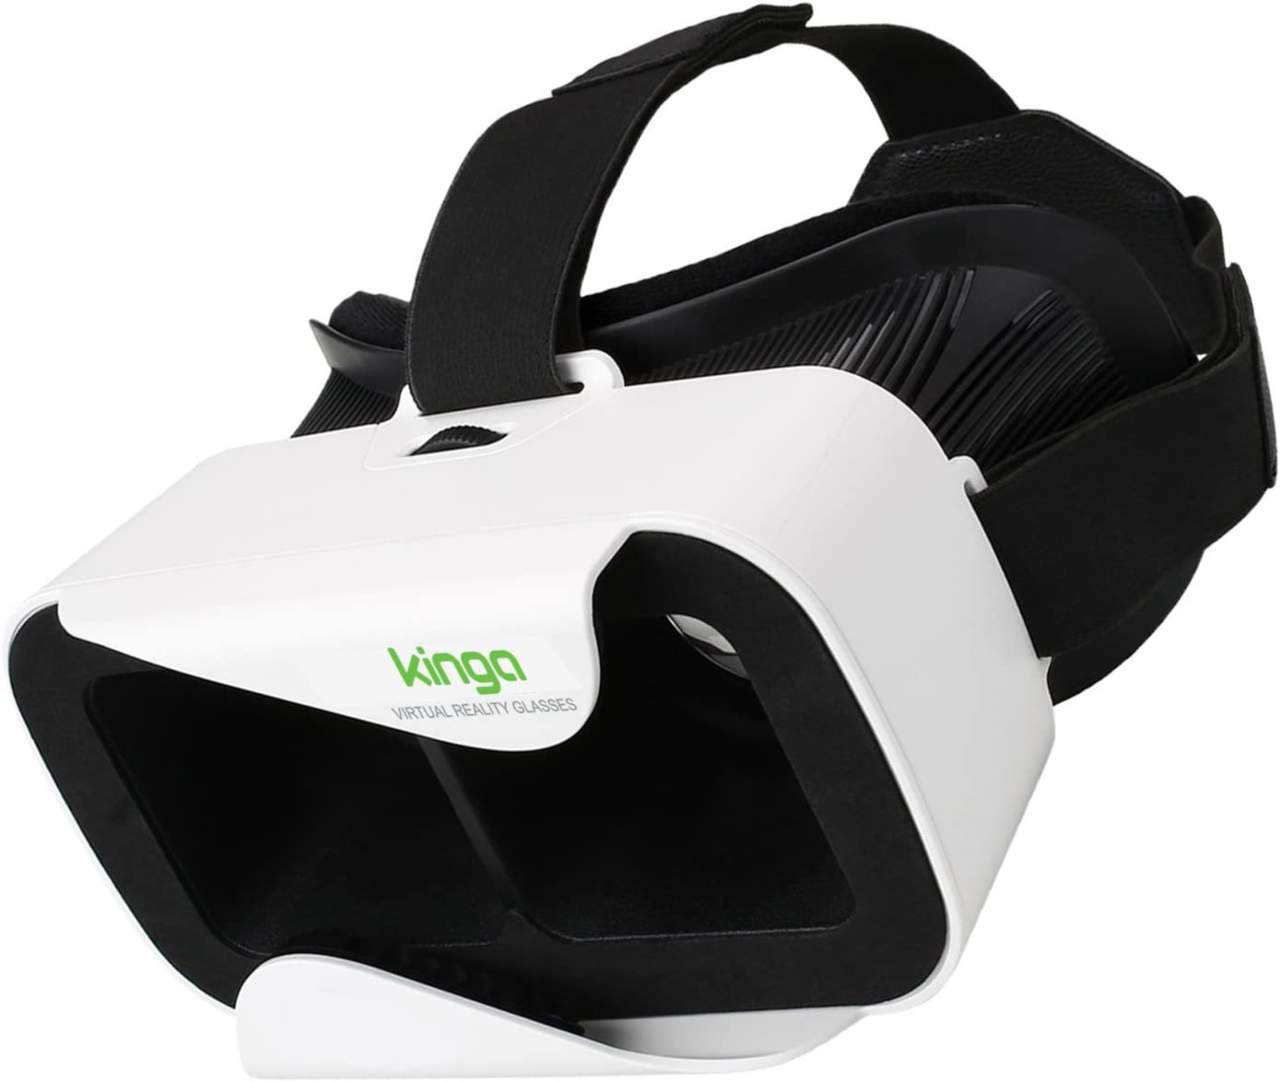 Gli occhiali VR Kinga KD-6002